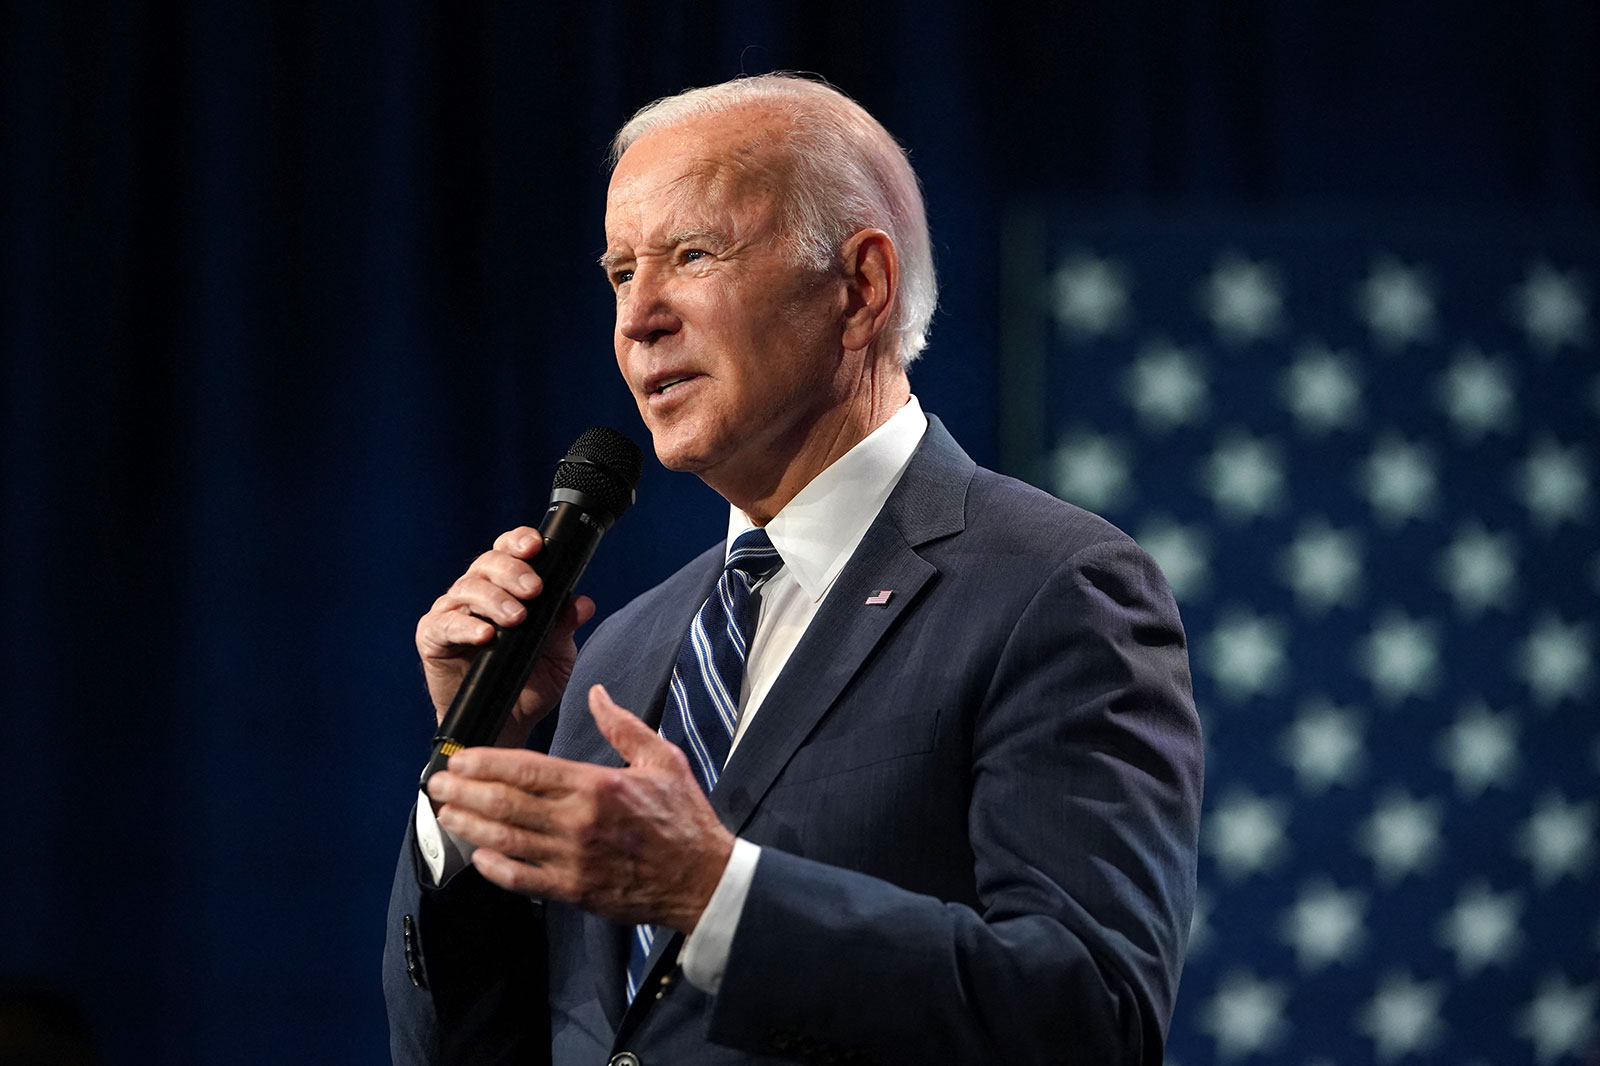 President Joe Biden speaks at a Democratic National Committee event in Washington, DC, on November 10.